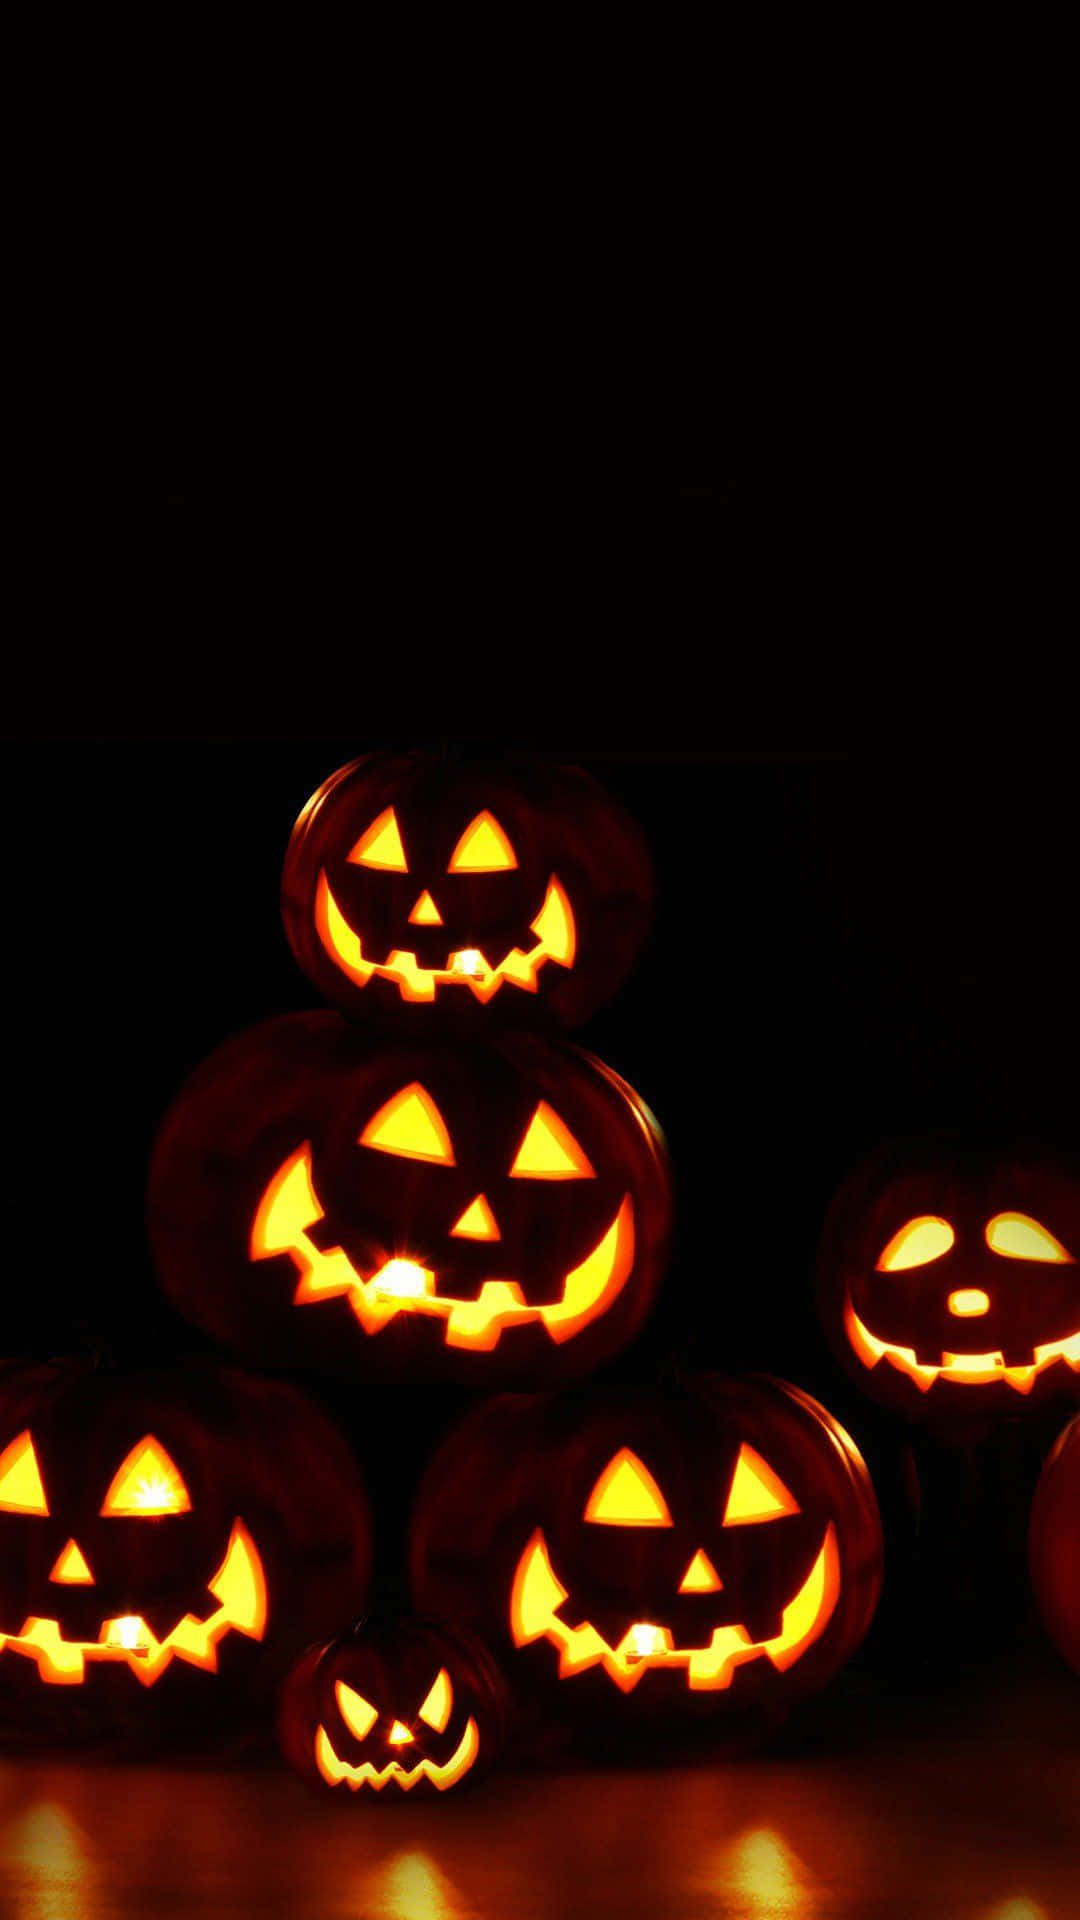 Läskigtutseende På Jack O'lanterns Iphone Halloween-bakgrund.